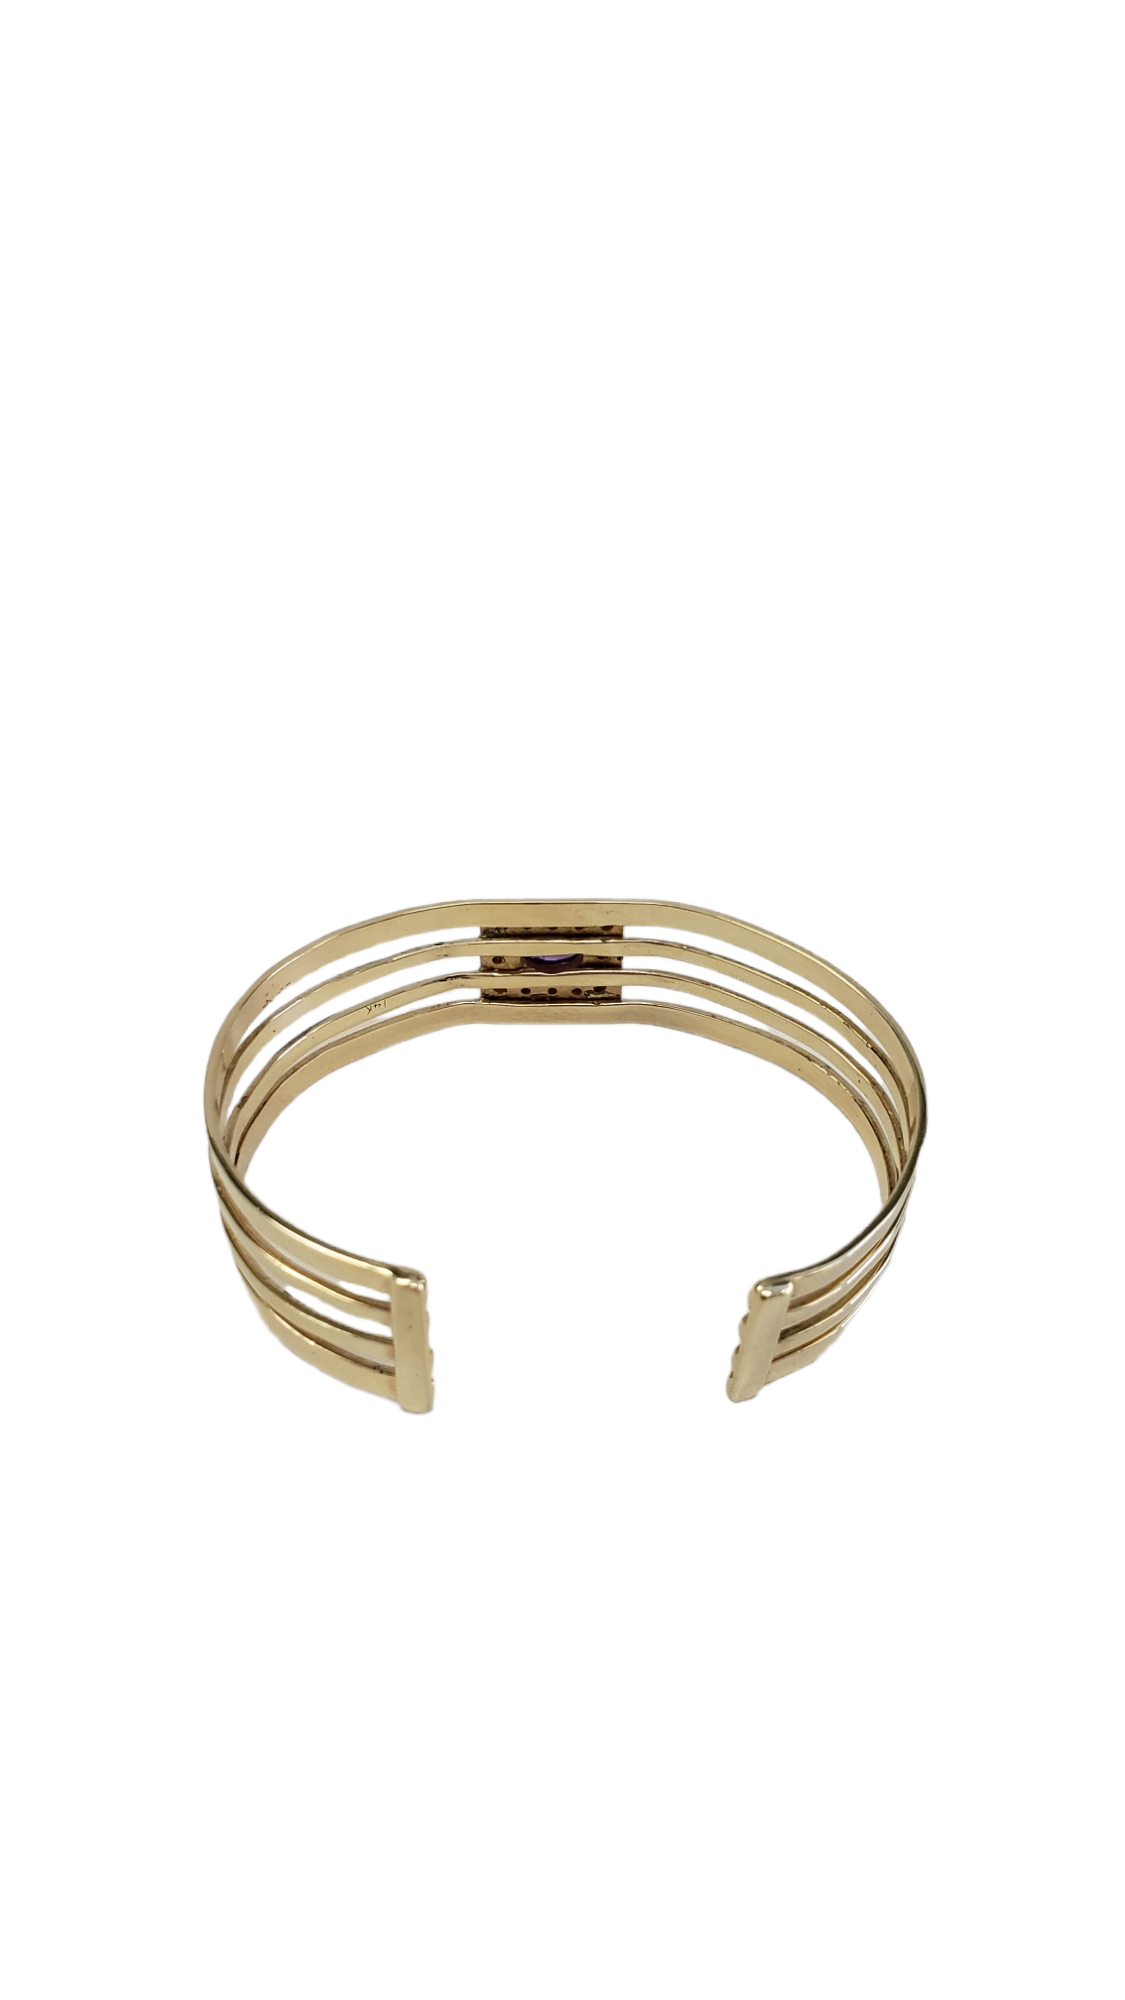 Bezel Set Cabochon Amethyst and Diamond Bangle Bracelet made in 14-Karat Yellow Gold